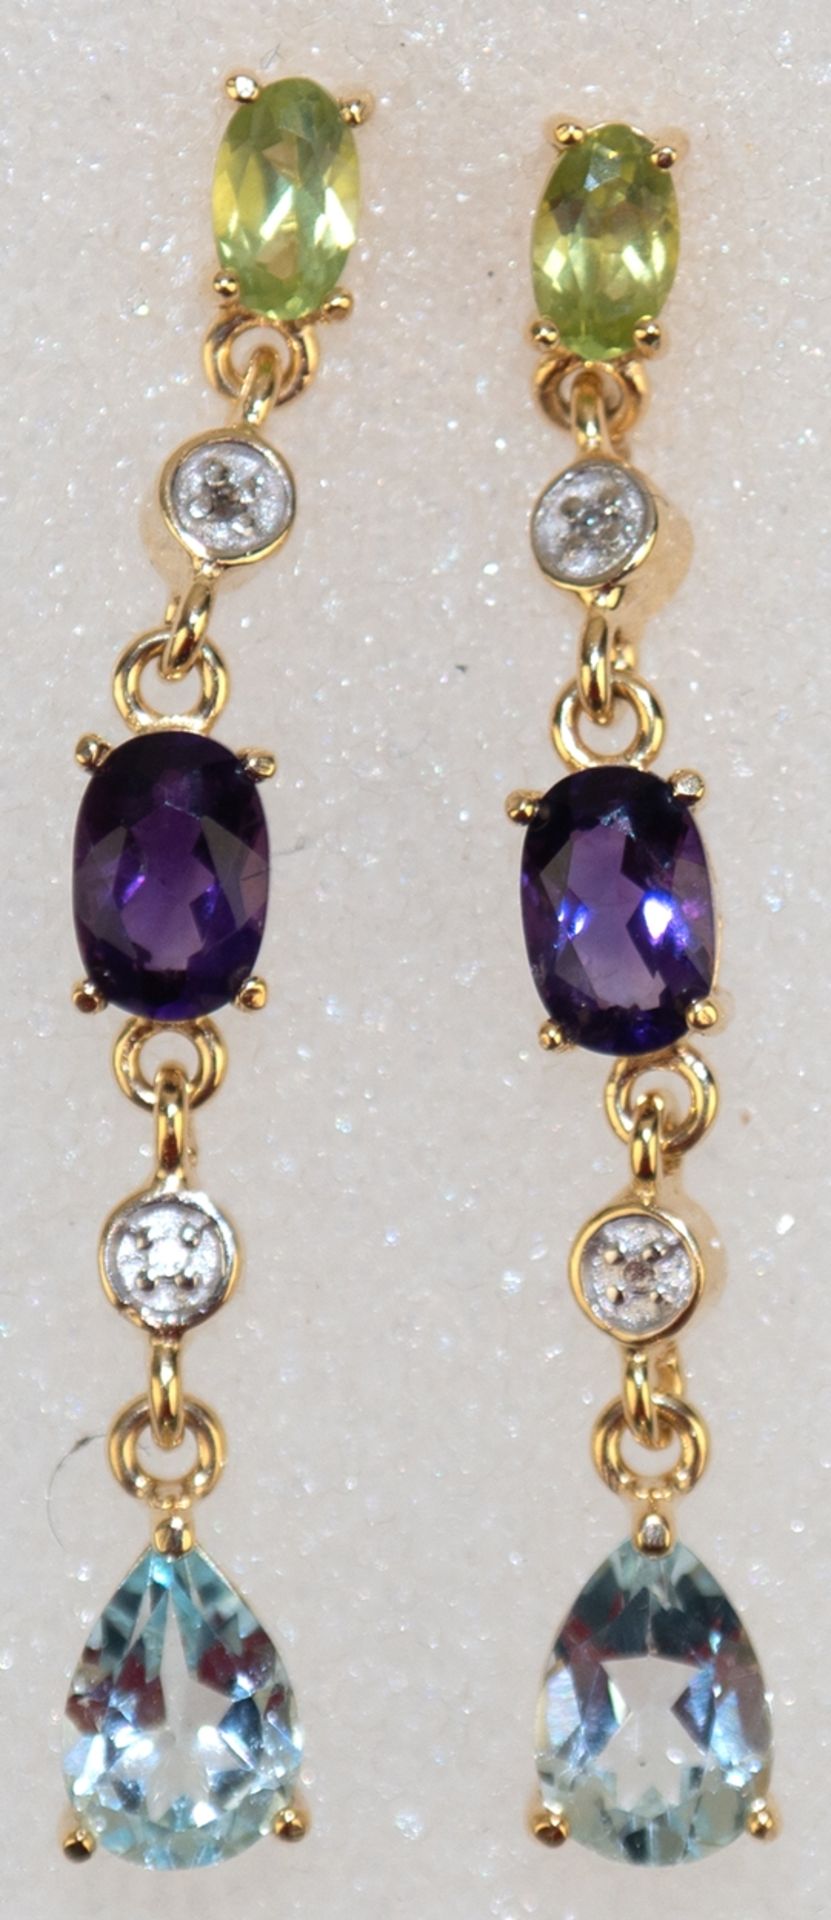 Lange Ohrringe, 925er Silber, vergoldet, Peridot, kl. Diamant, Amethyst und Blautopas, Länge ca. 3,